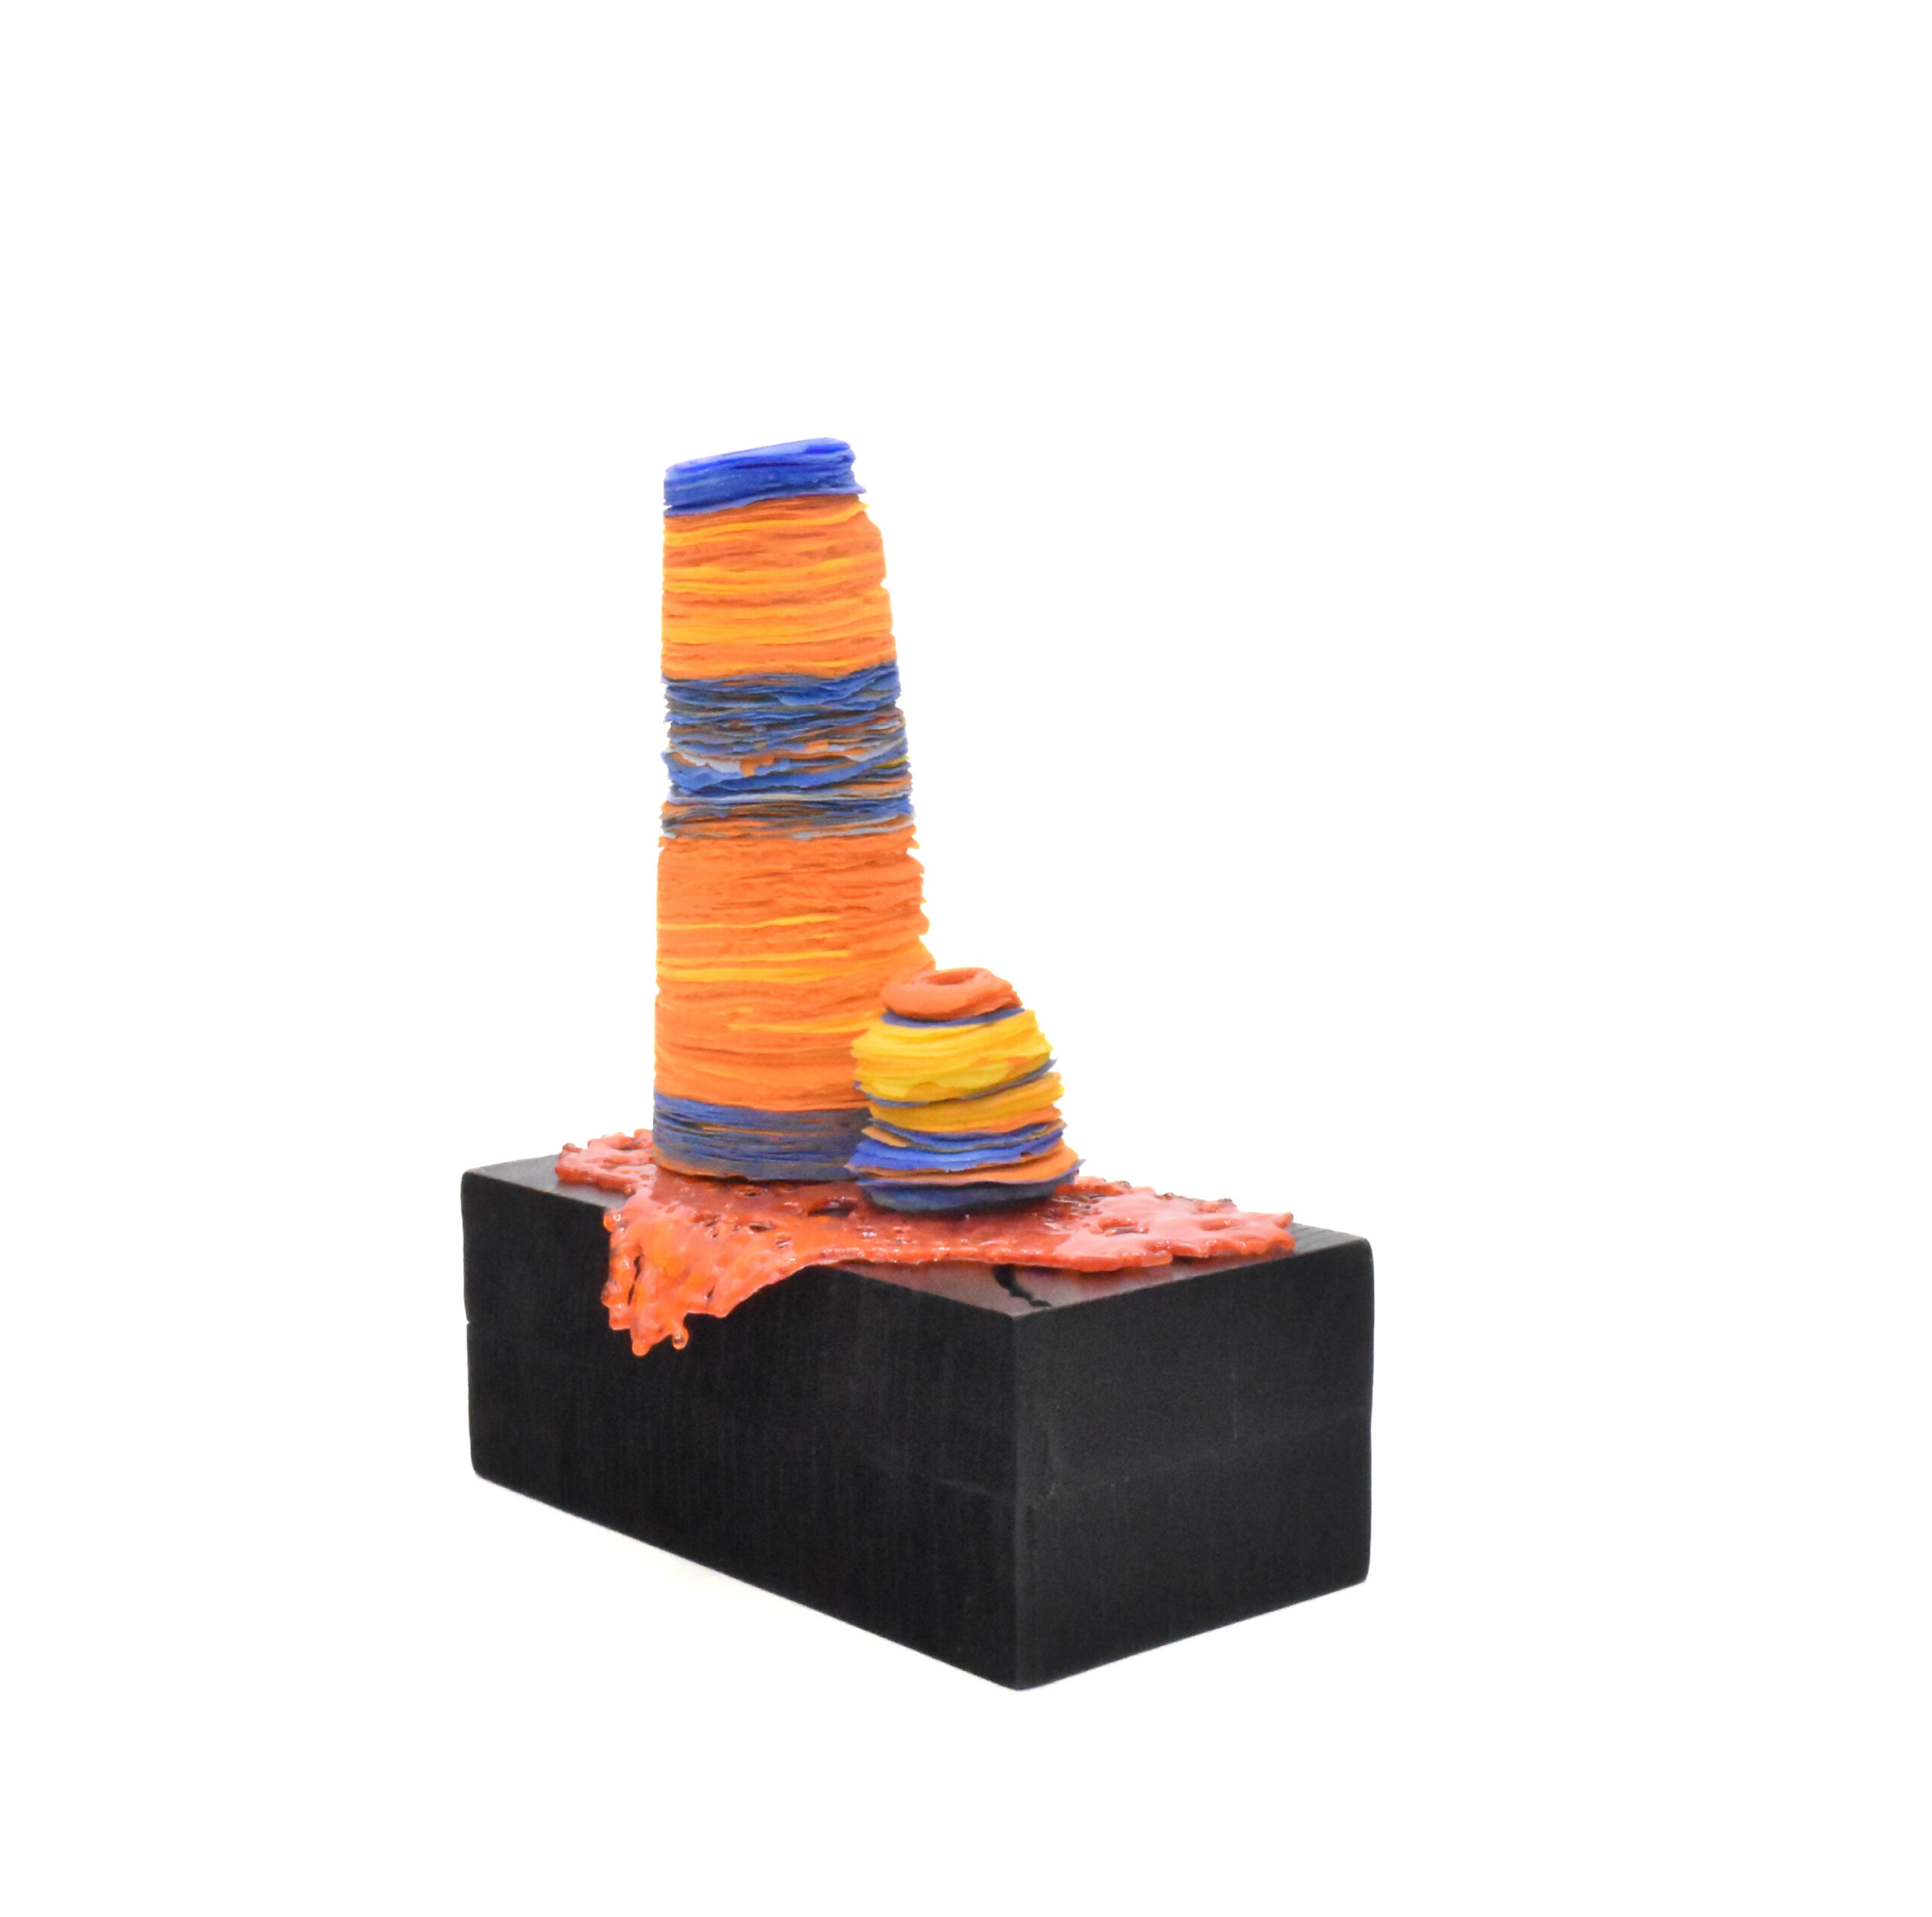 Alison Jardine 'Orange stack 1' 21(h)x16x8 Glass, silver leaf, paint on wood